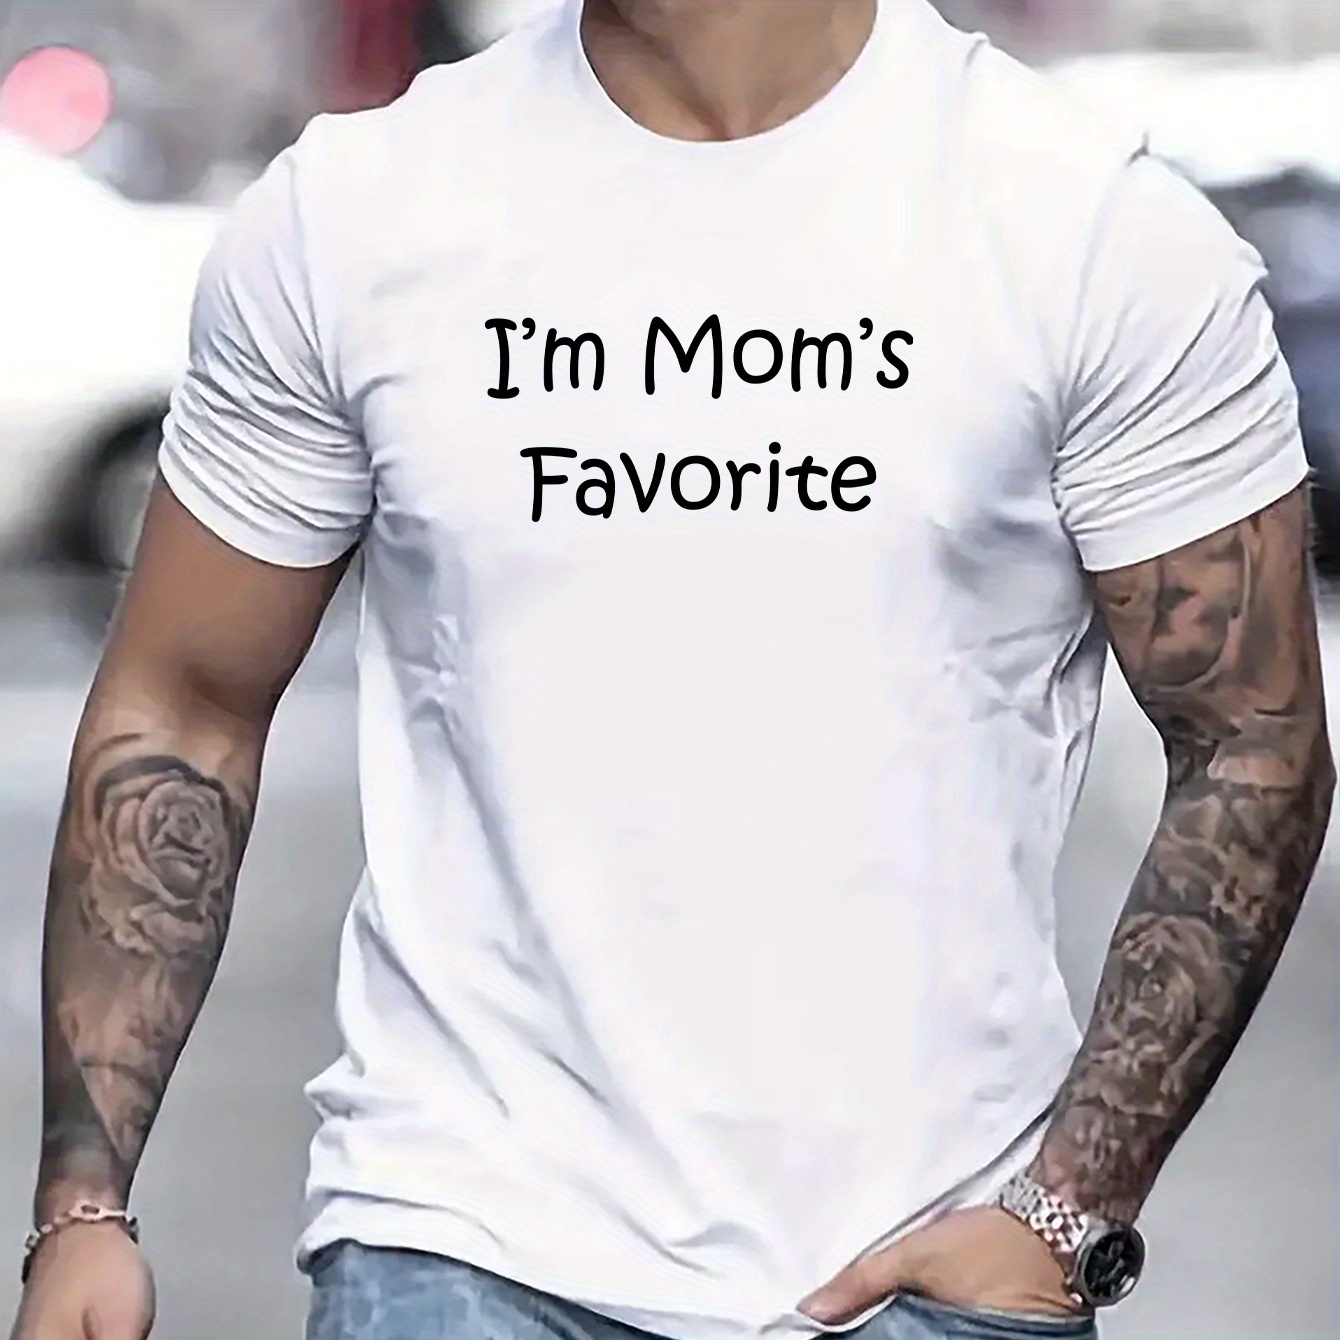 

I'm Mom's Favorite Print T Shirt, Tees For Men, Casual Short Sleeve T-shirt For Summer